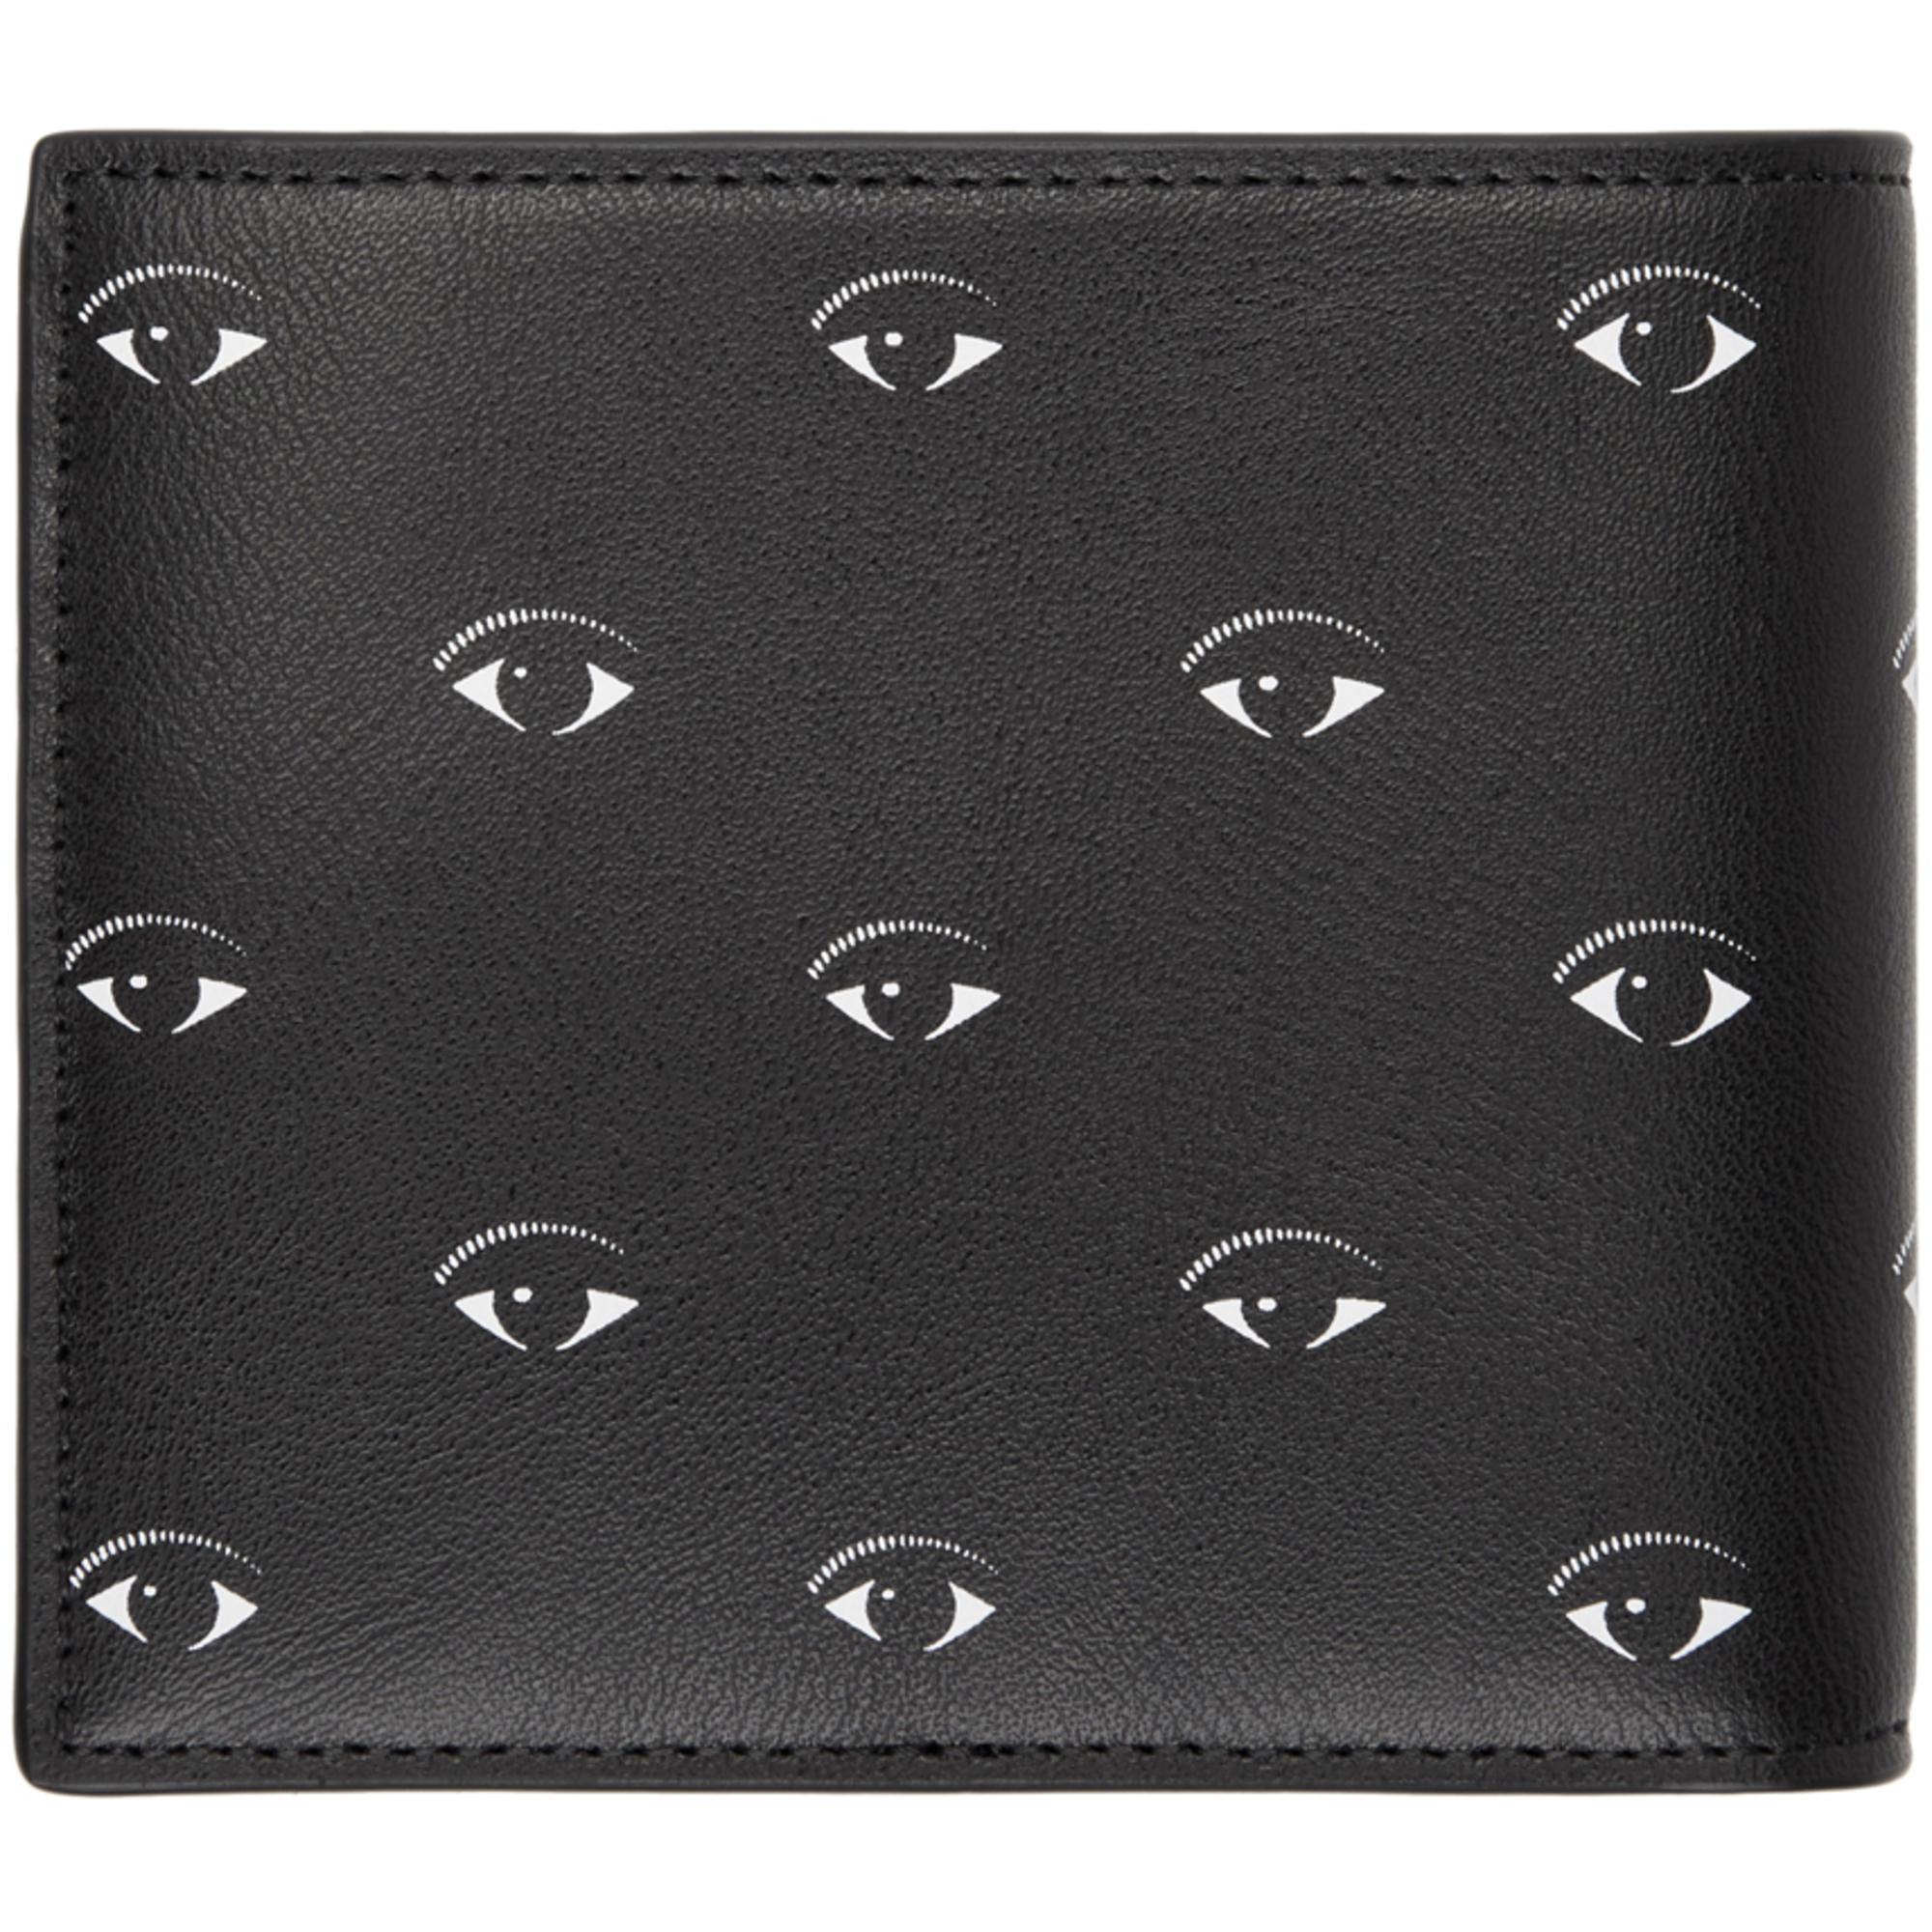 KENZO Leather Black Multi Eye Wallet 